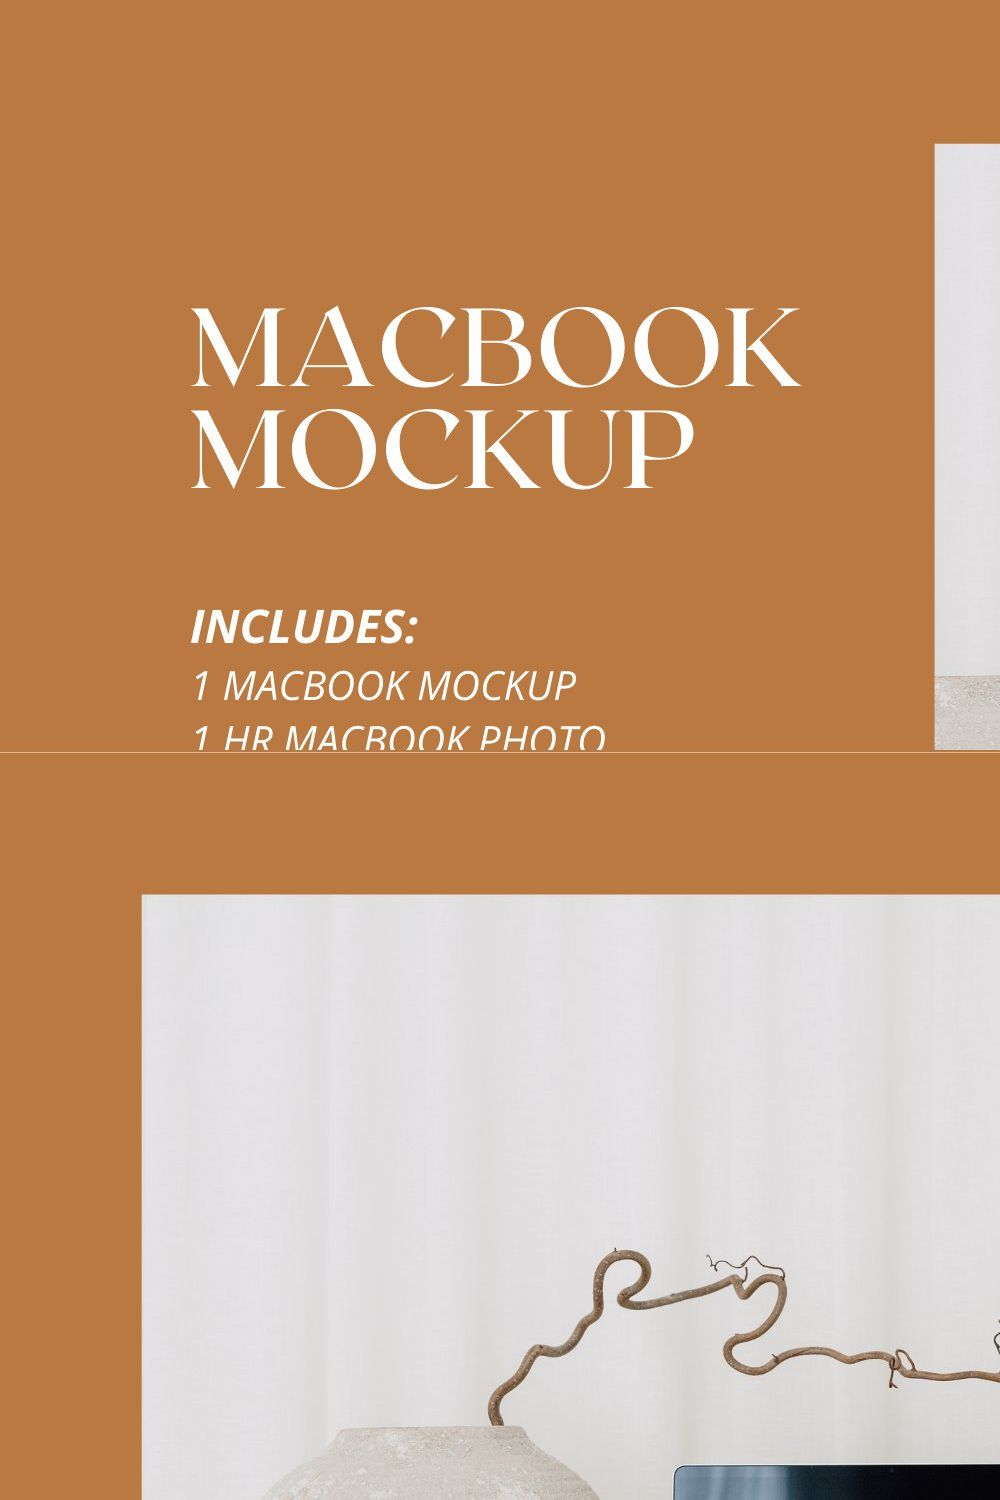 Macbook Mockup, TERRA 5 pinterest preview image.